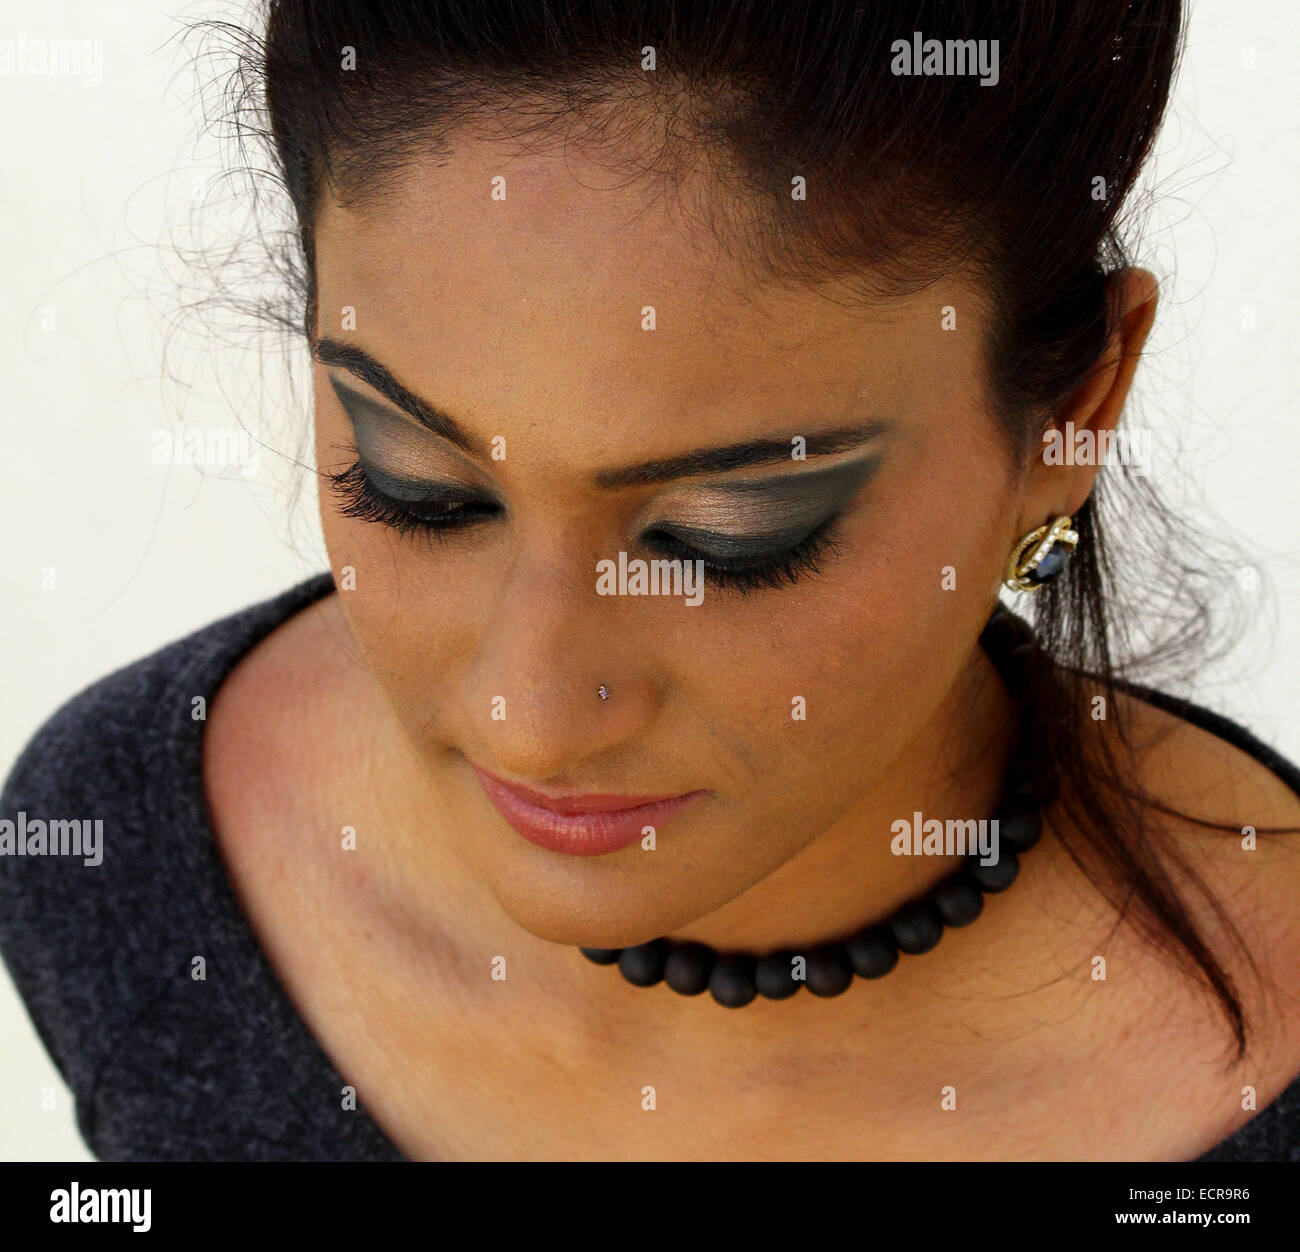 Indian woman with smoky eye make up Stock Photo